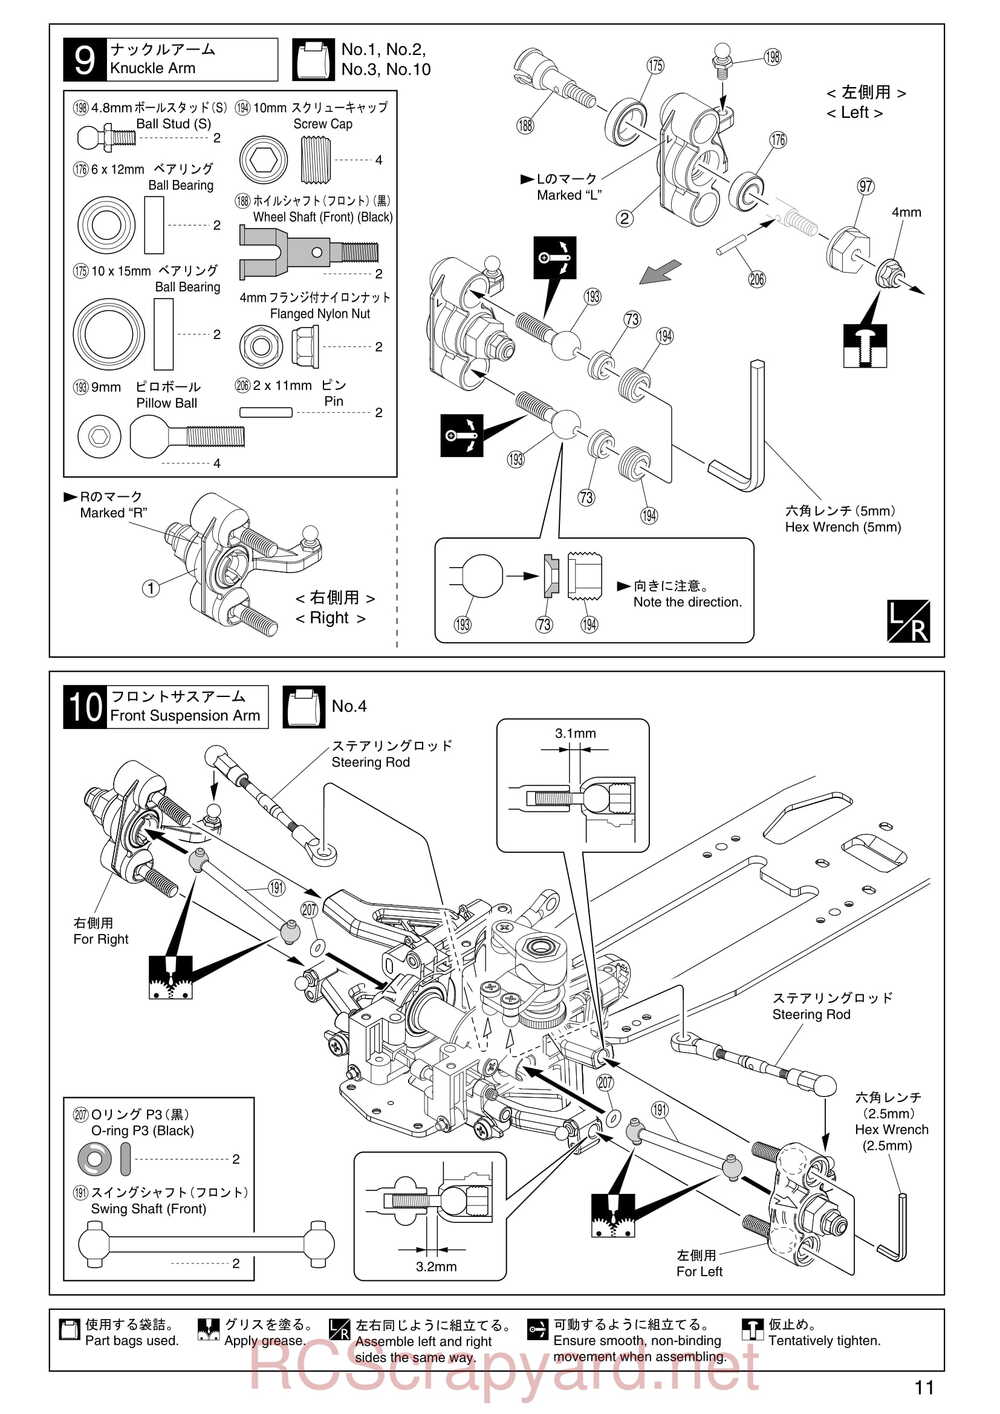 Kyosho - 31256 - V-One RRR - Manual - Page 11